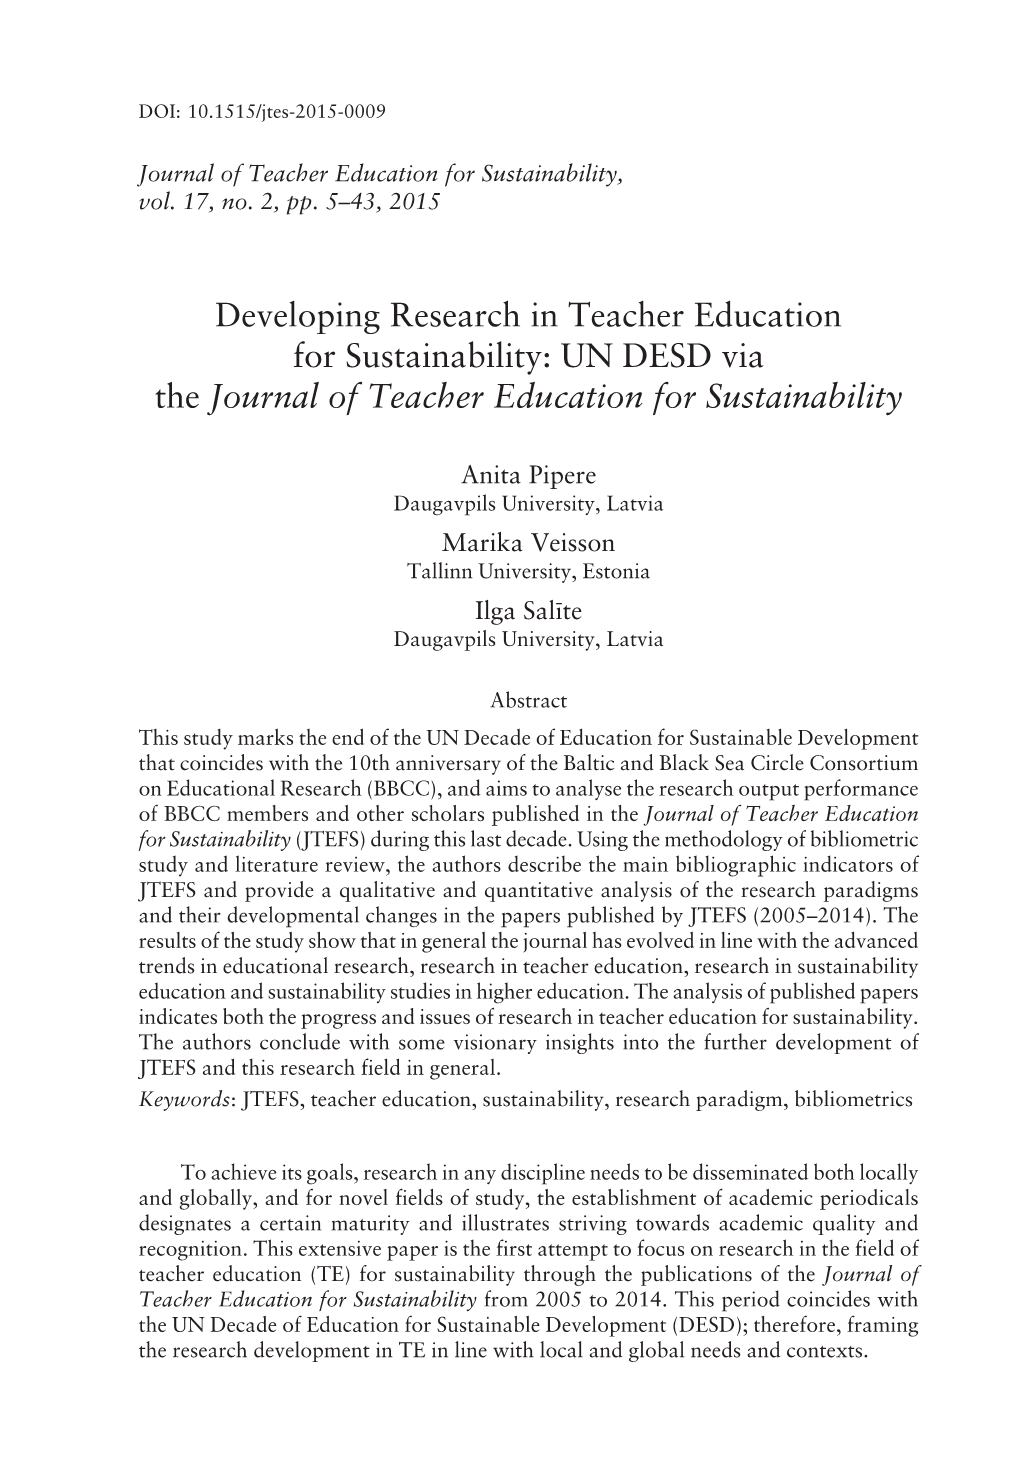 UN DESD Via the Journal of Teacher Education for Sustainability